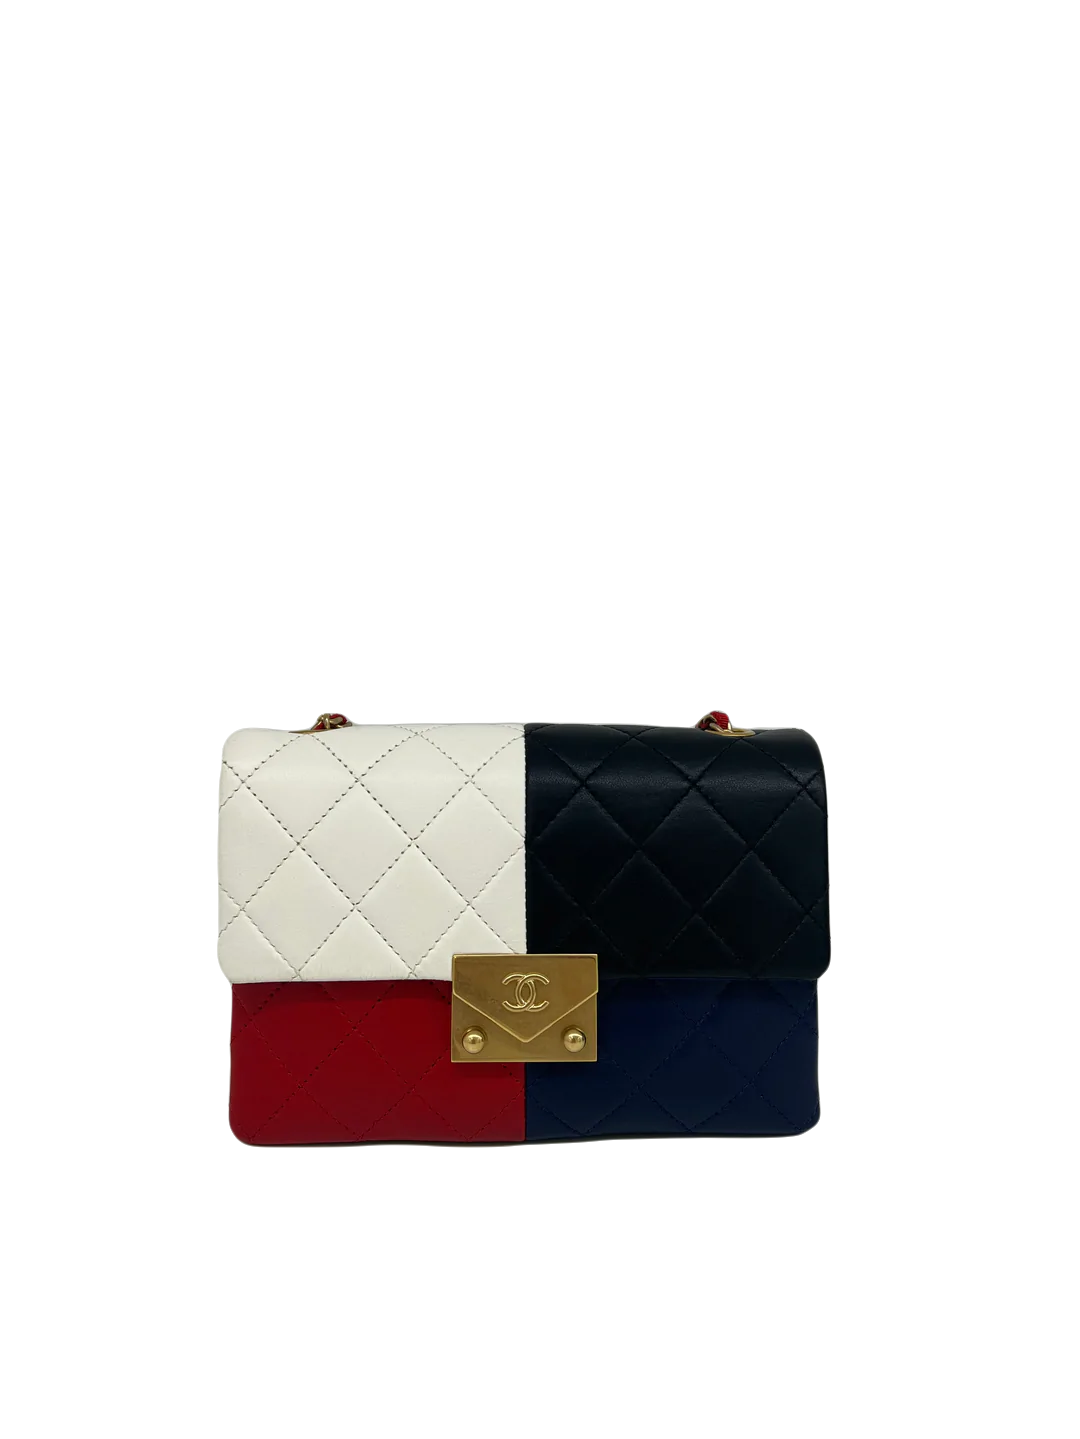 Chanel Mini Flap Cruise 2016 - SOLD